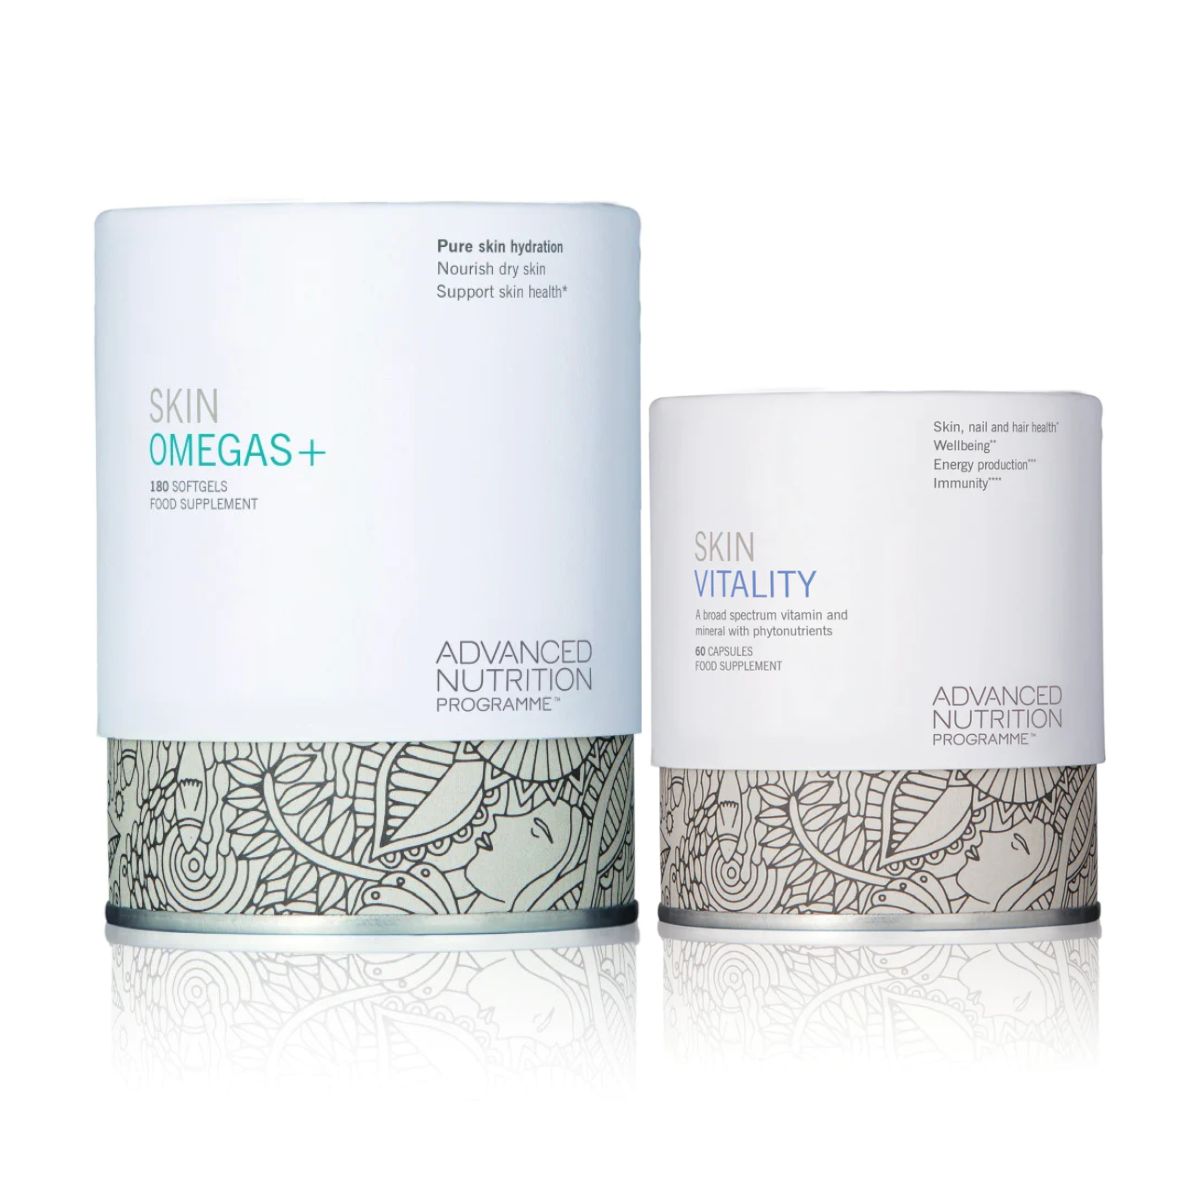 Advanced Nutrition Programme Skin Omegas+ 180 Complimentary Full-size Skin Vitality